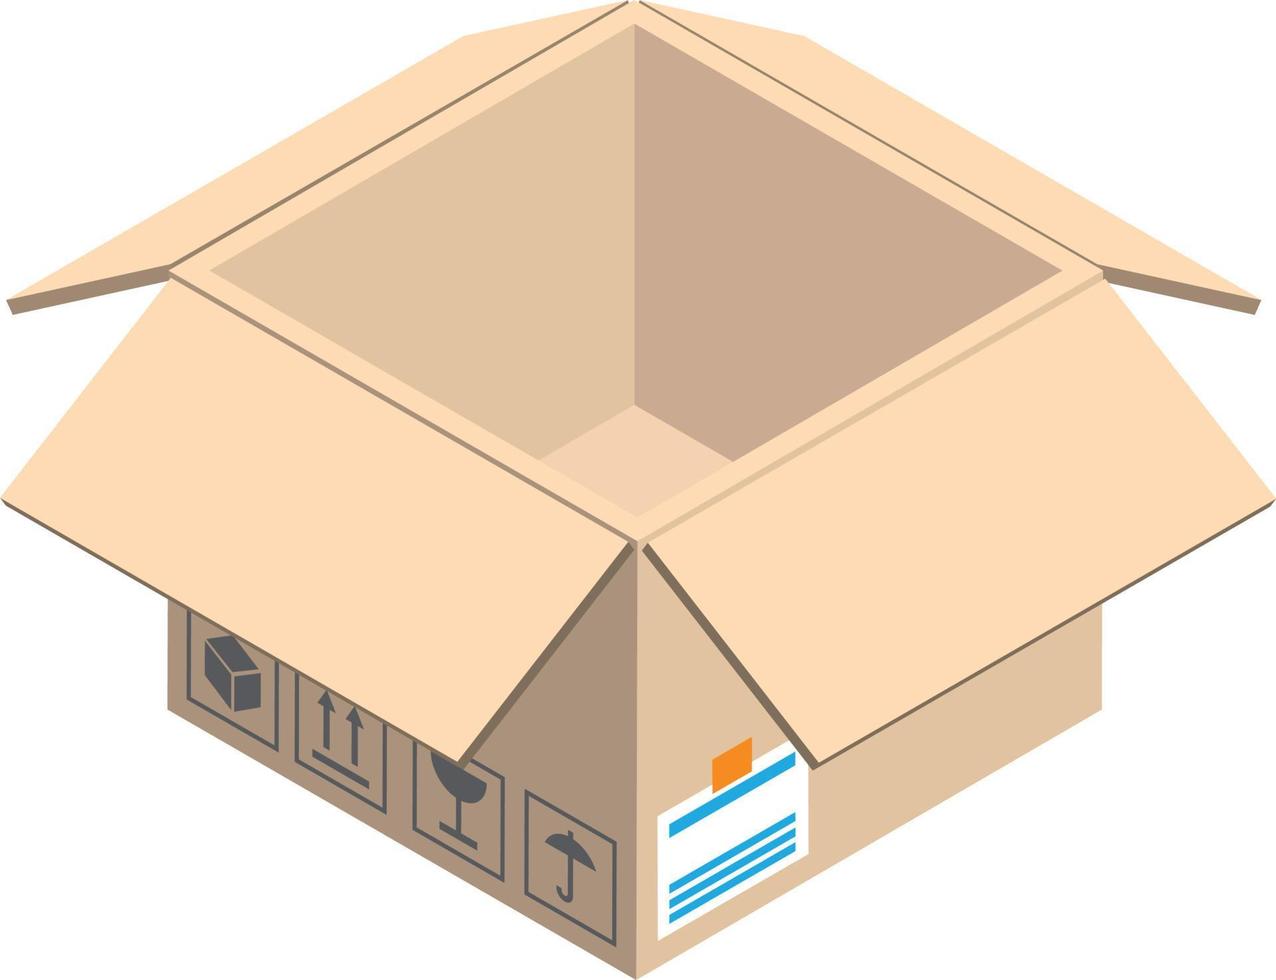 öppen paket låda illustration i 3d isometrisk stil vektor